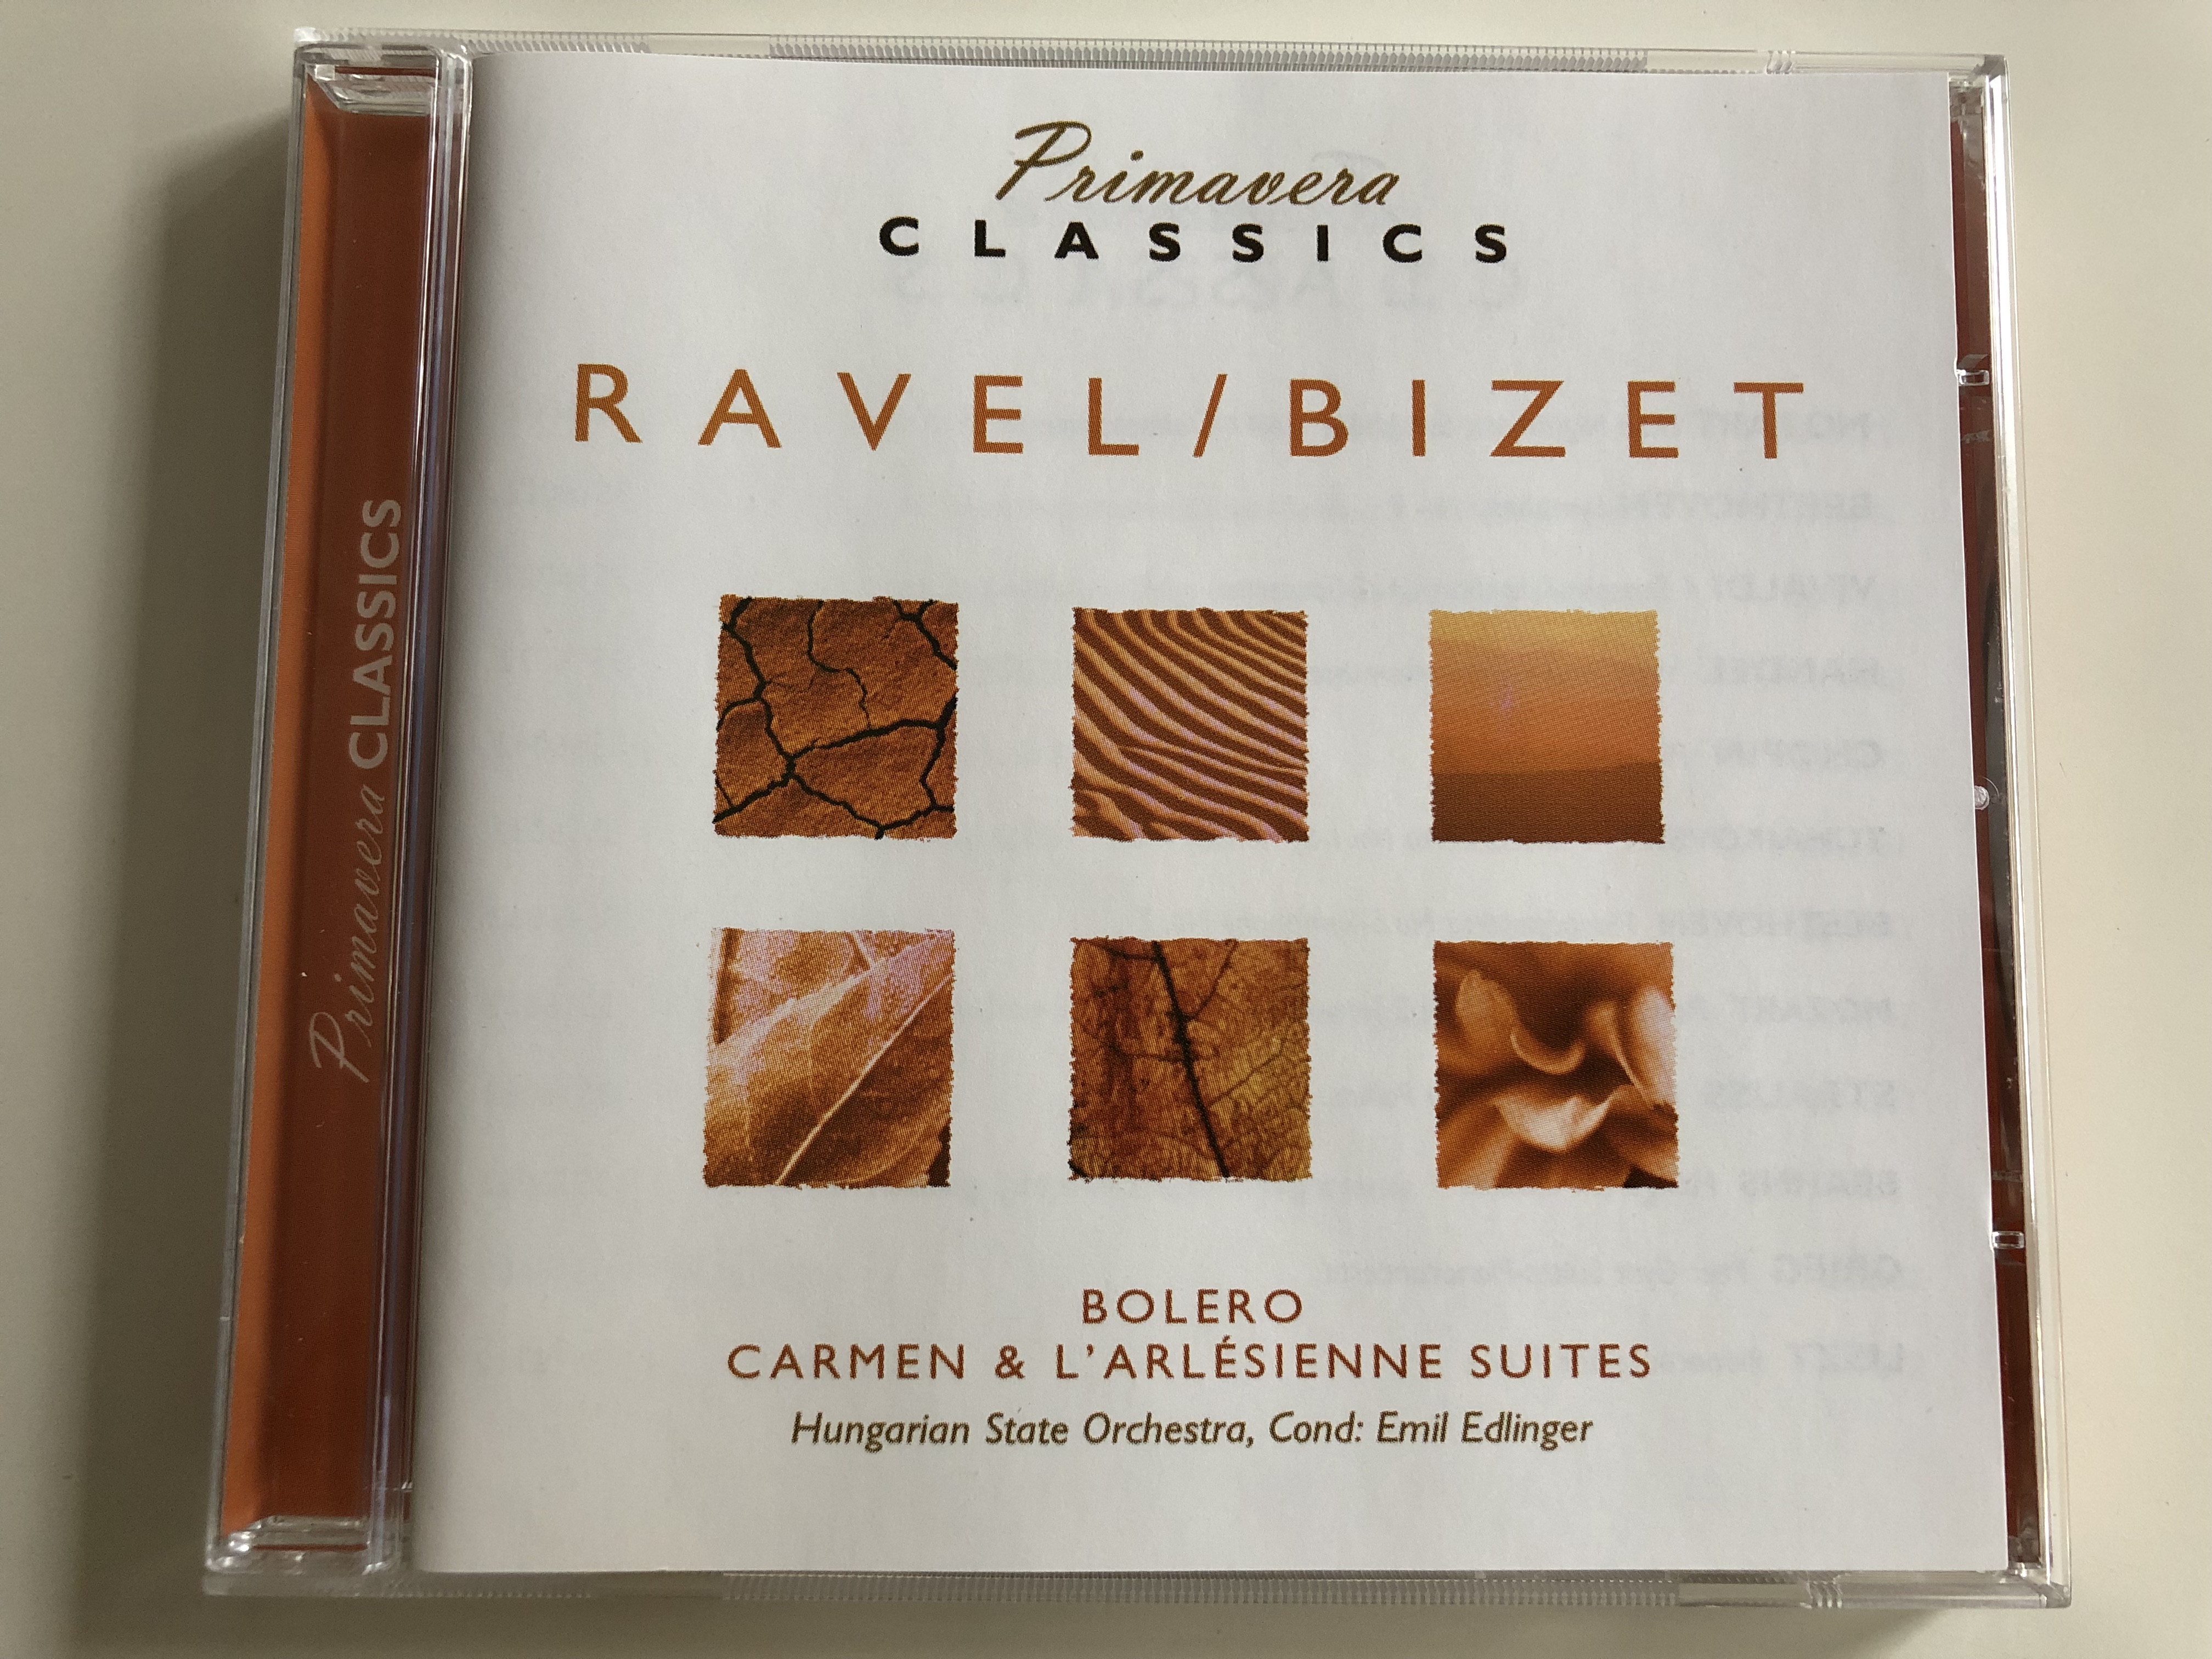 ravelbizet-bolero-carmen-l-arlesienne-suites-hungarian-state-orchestra-conducted-emil-edlinger-primavera-classics-audio-cd-3516132-1-.jpg